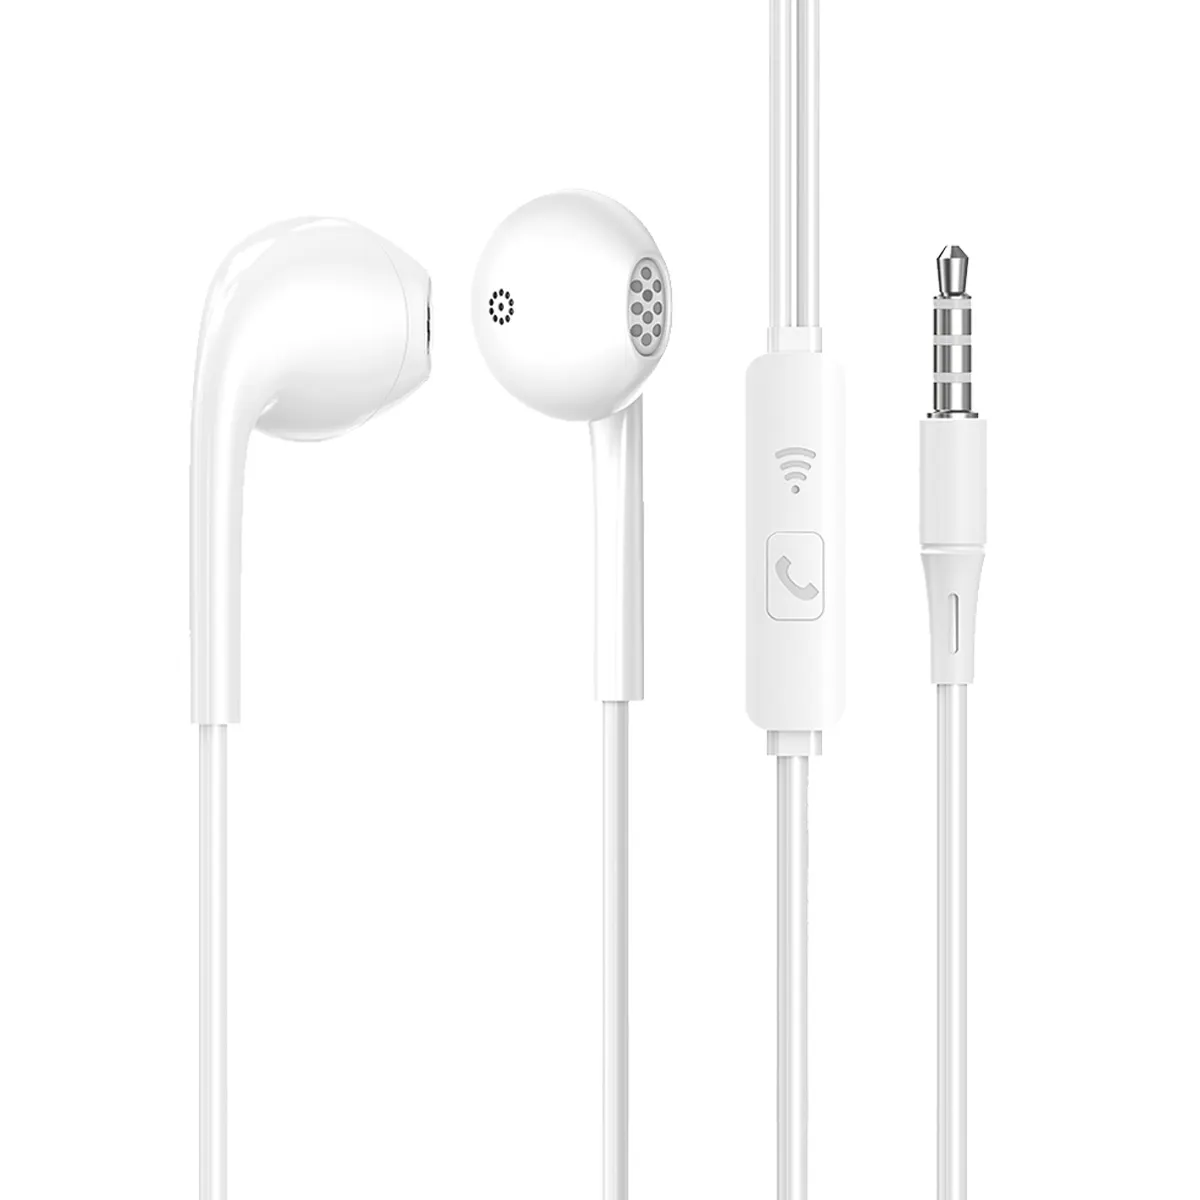 ASPOR A219 handsfree 3.5mm earphones stereo wired headphone earphone with microphone In-ear basic headphone for mobile phone OEM